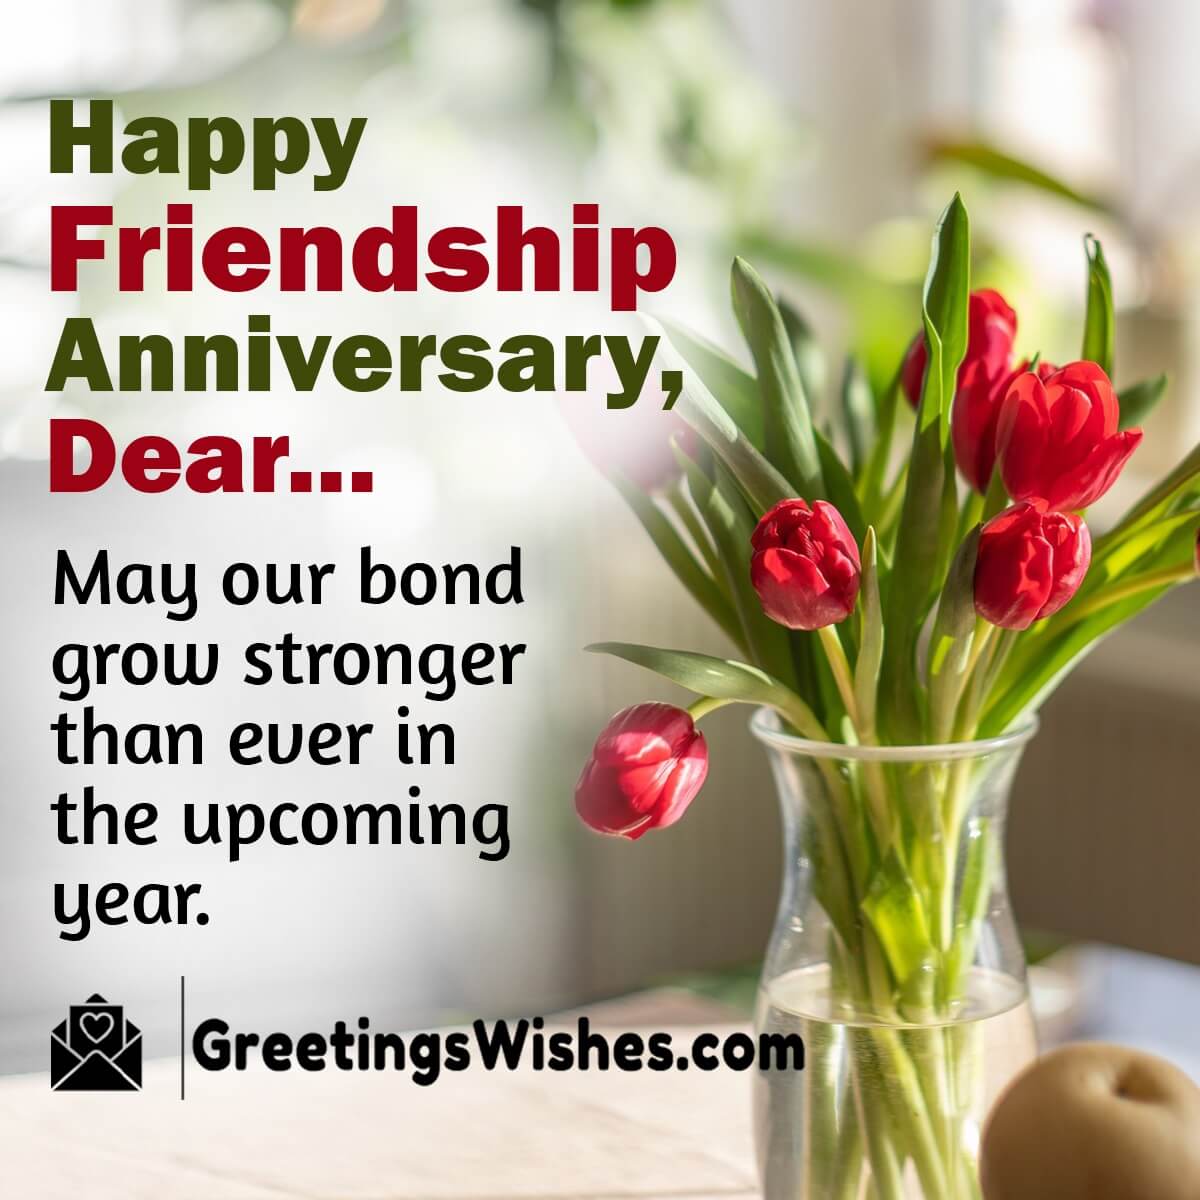 Happy Friendship Anniversary Dear